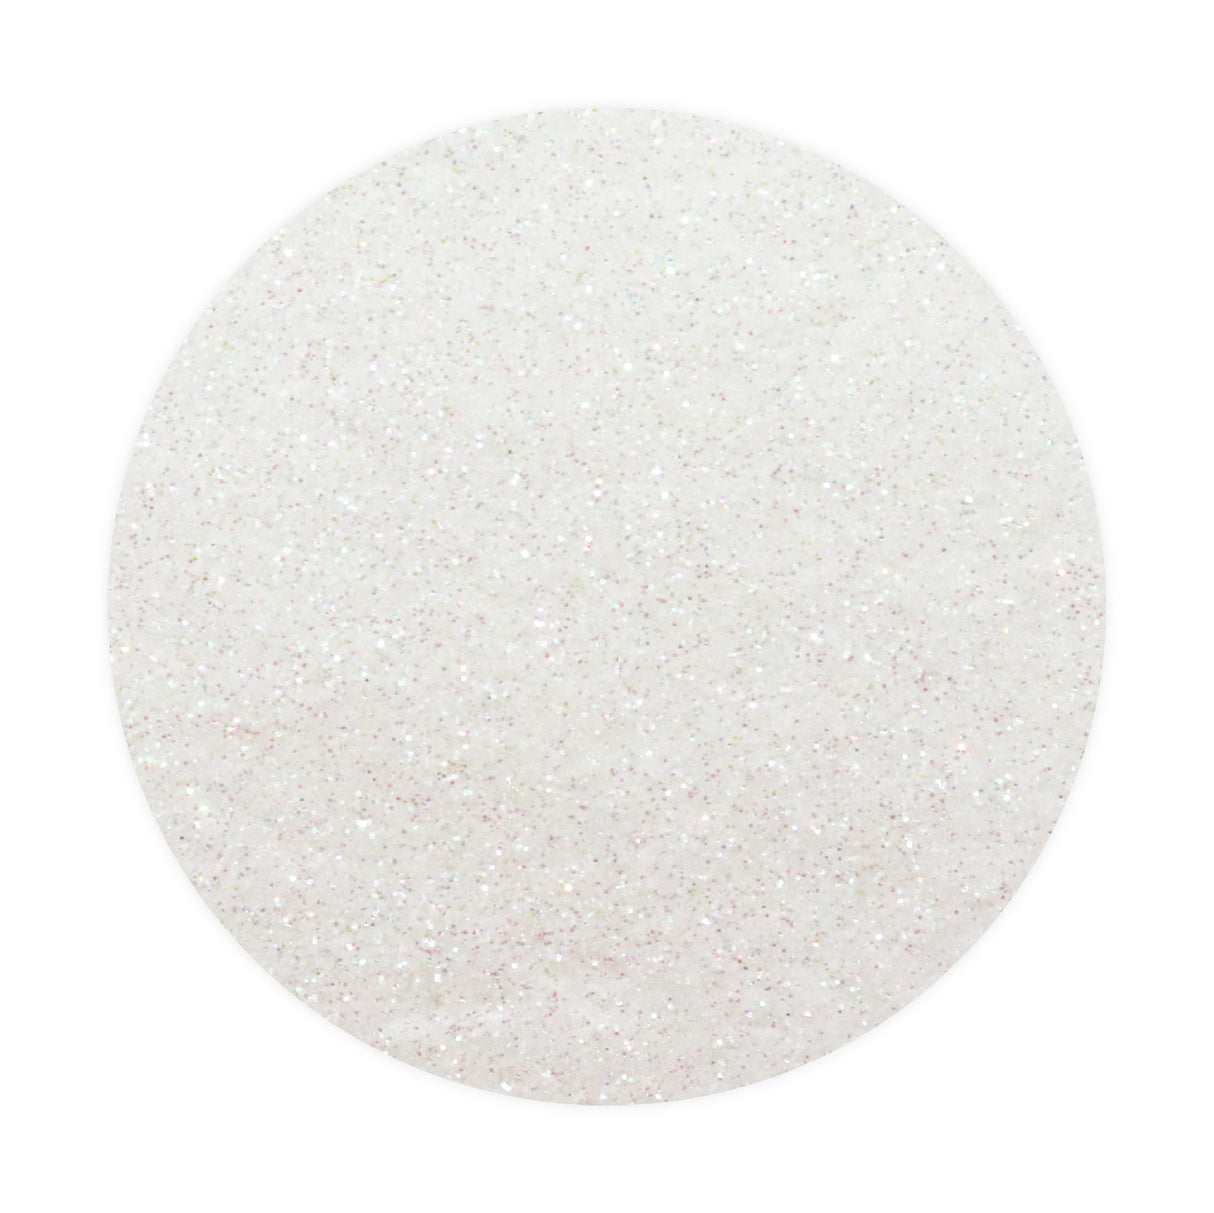 Crystallina Sparkelicious Glitter 1/2oz Jar